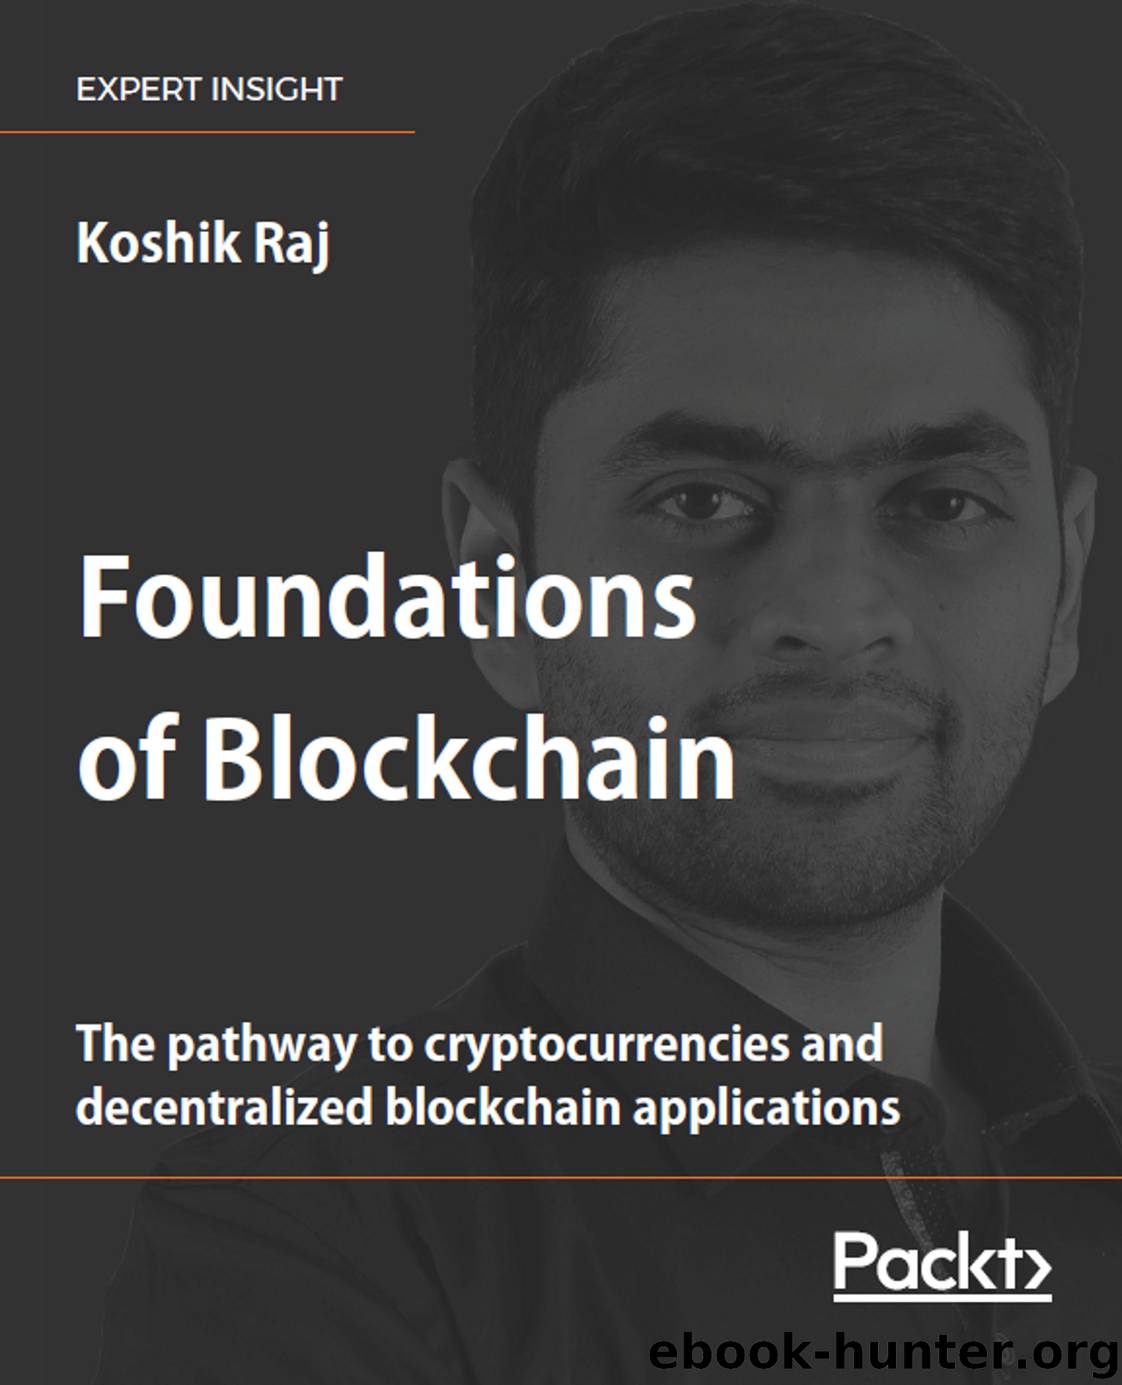 Foundations of Blockchain by Koshik Raj